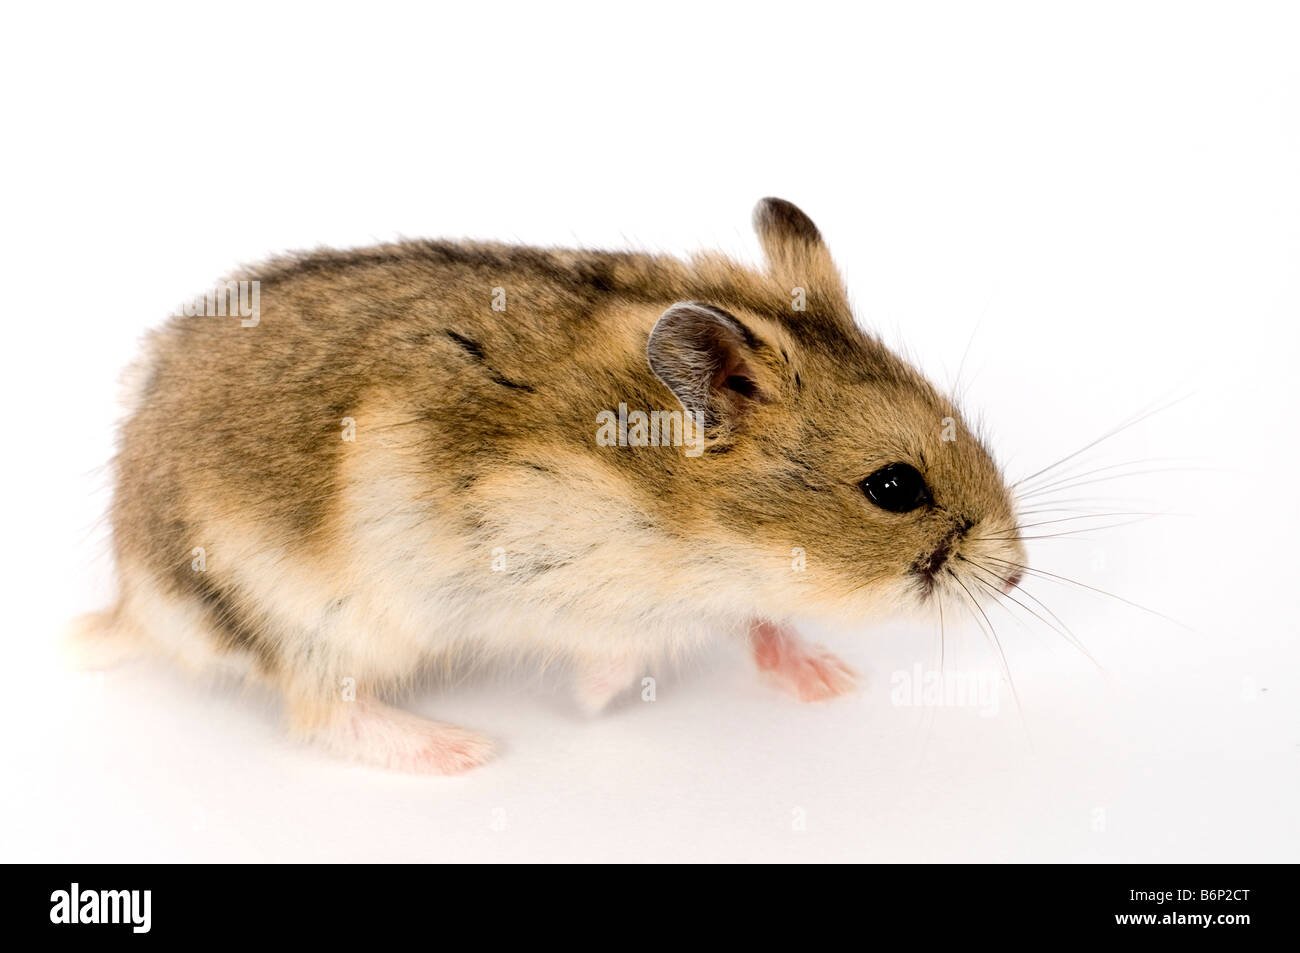 Забайкальский хомячок. Ареал джунгарского хомяка. Phodopus campbelli (Thomas, 1905) - хомячок Кэмпбелла. Хомячок Кэмпбелла. Campbell Dwarf Hamster.